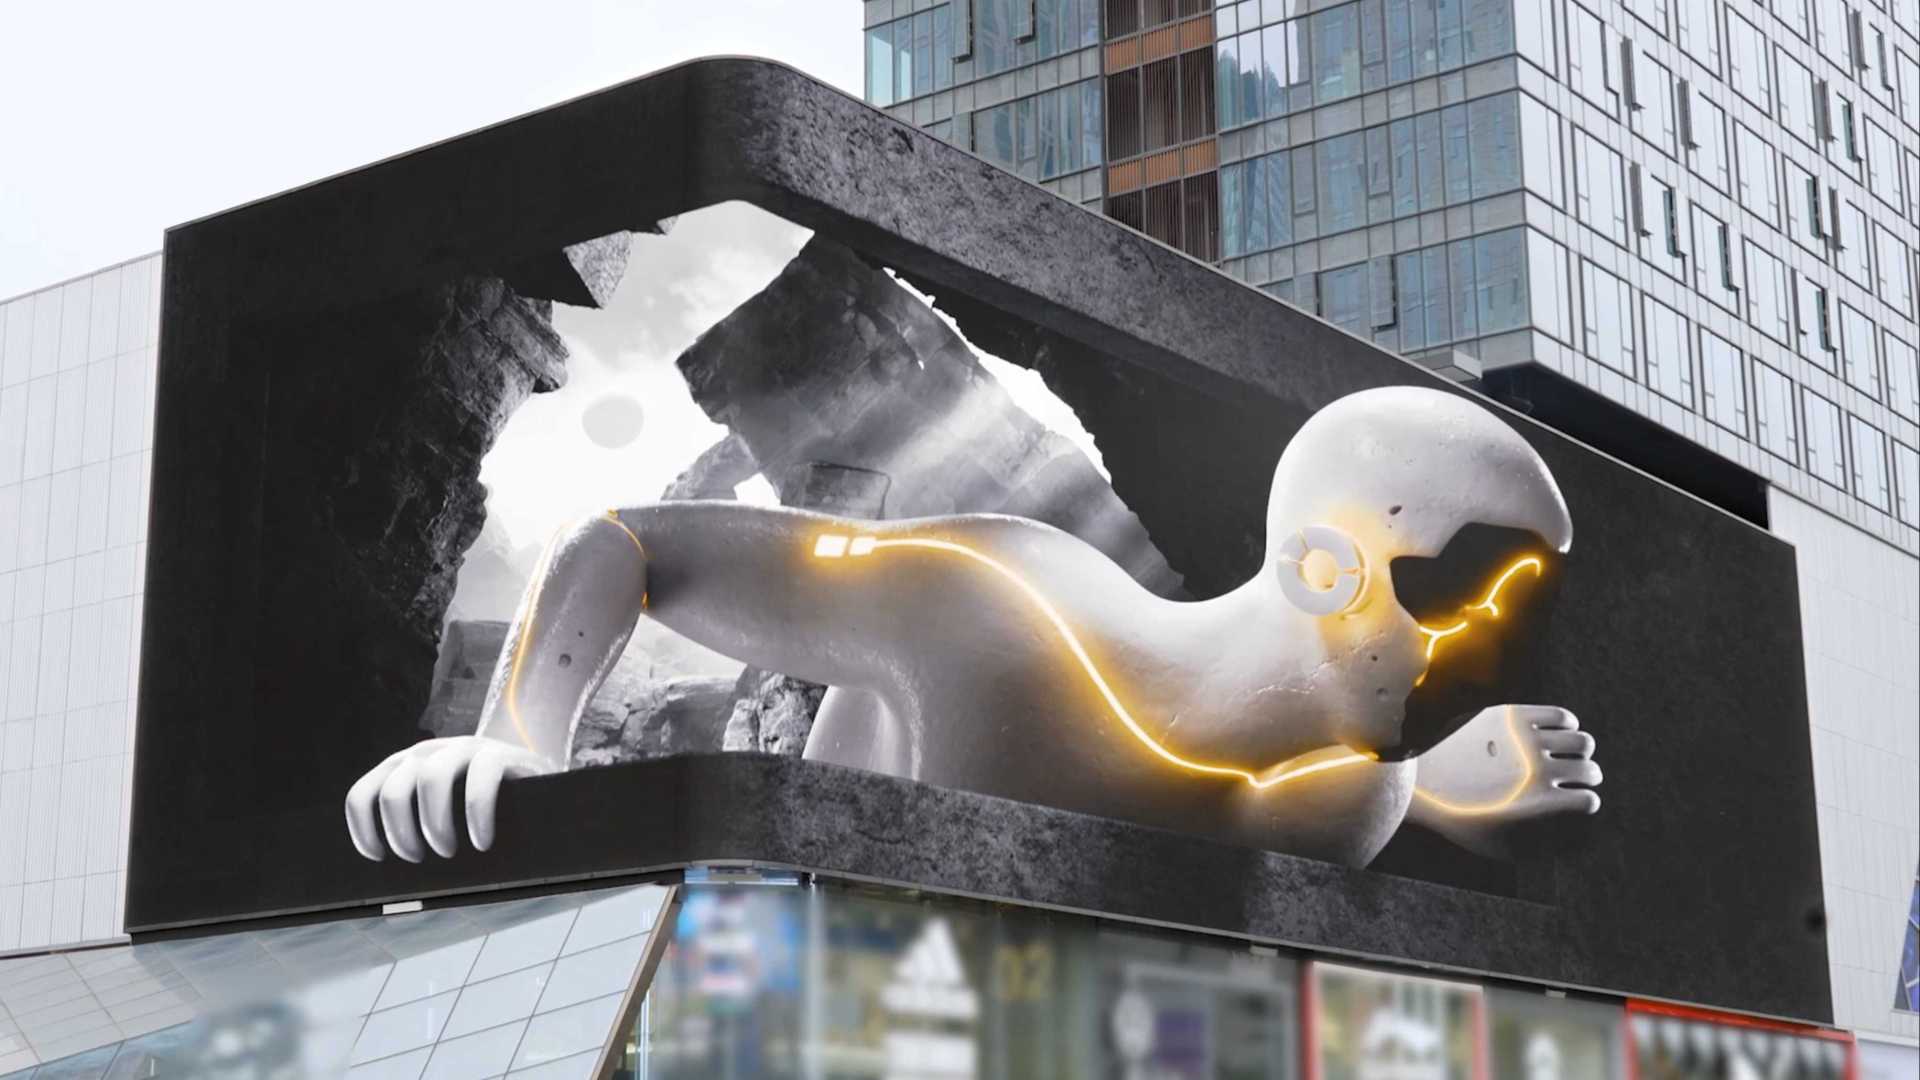 Flint Walk裸眼3D公共艺术《来自未知时空的神秘巨人》